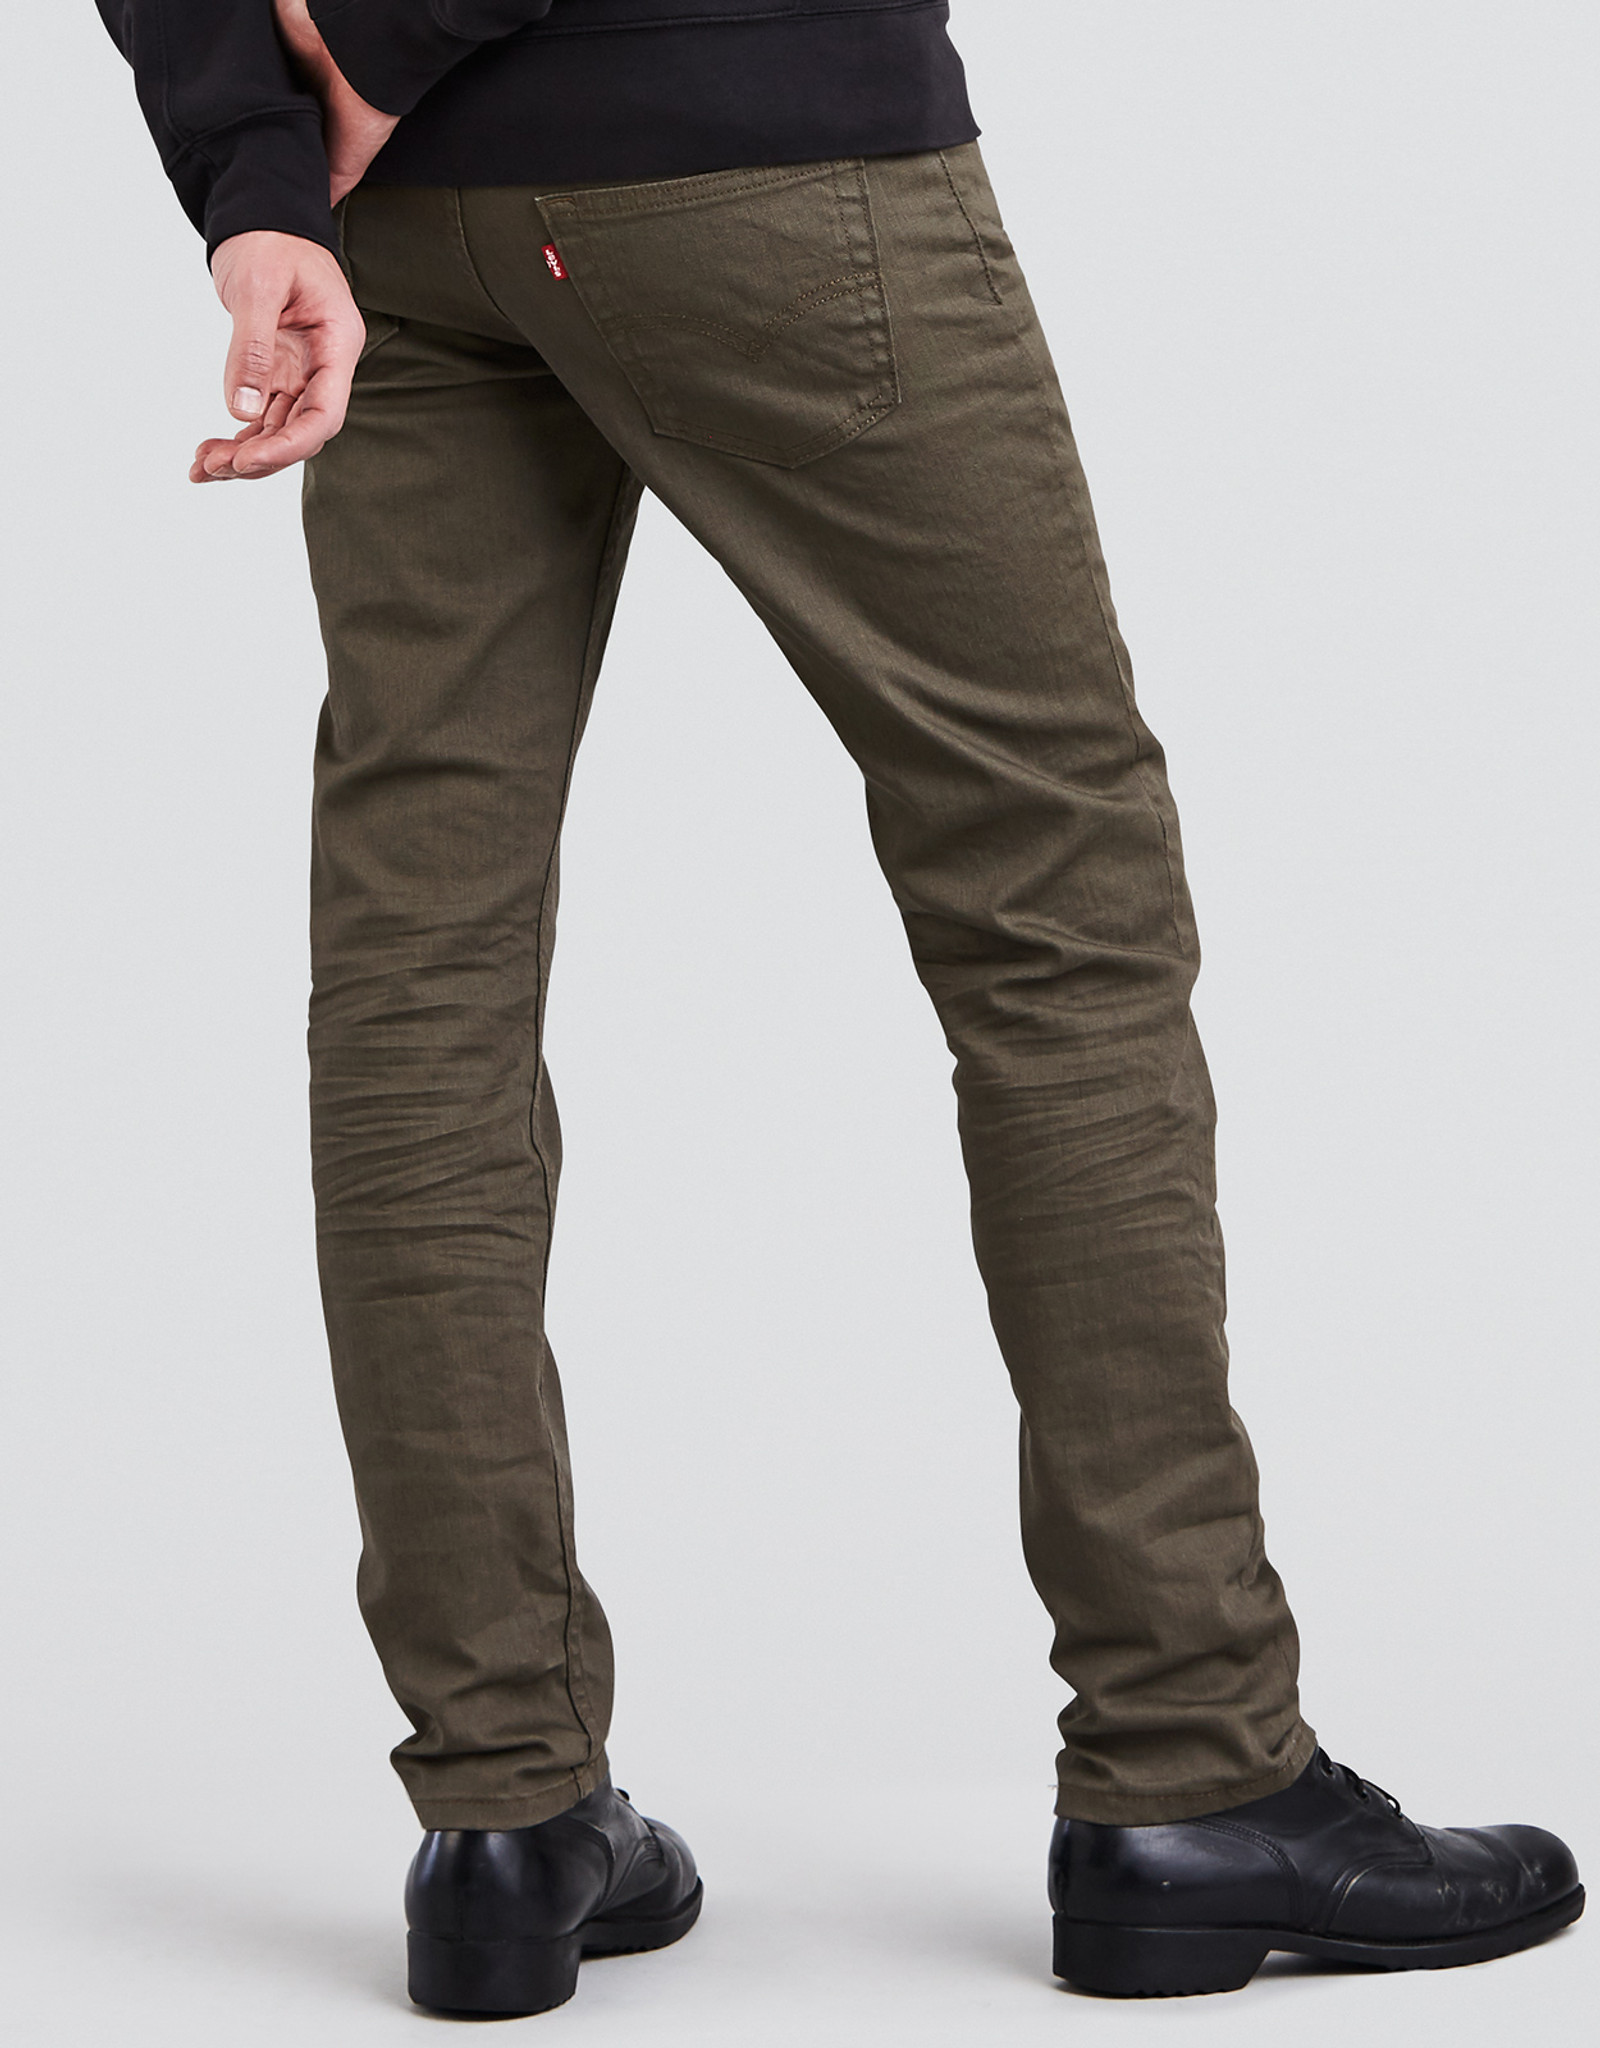 Levi's Men's 511 Slim Stretch Low Rise Slim Fit Slim Leg Jeans - New Khaki